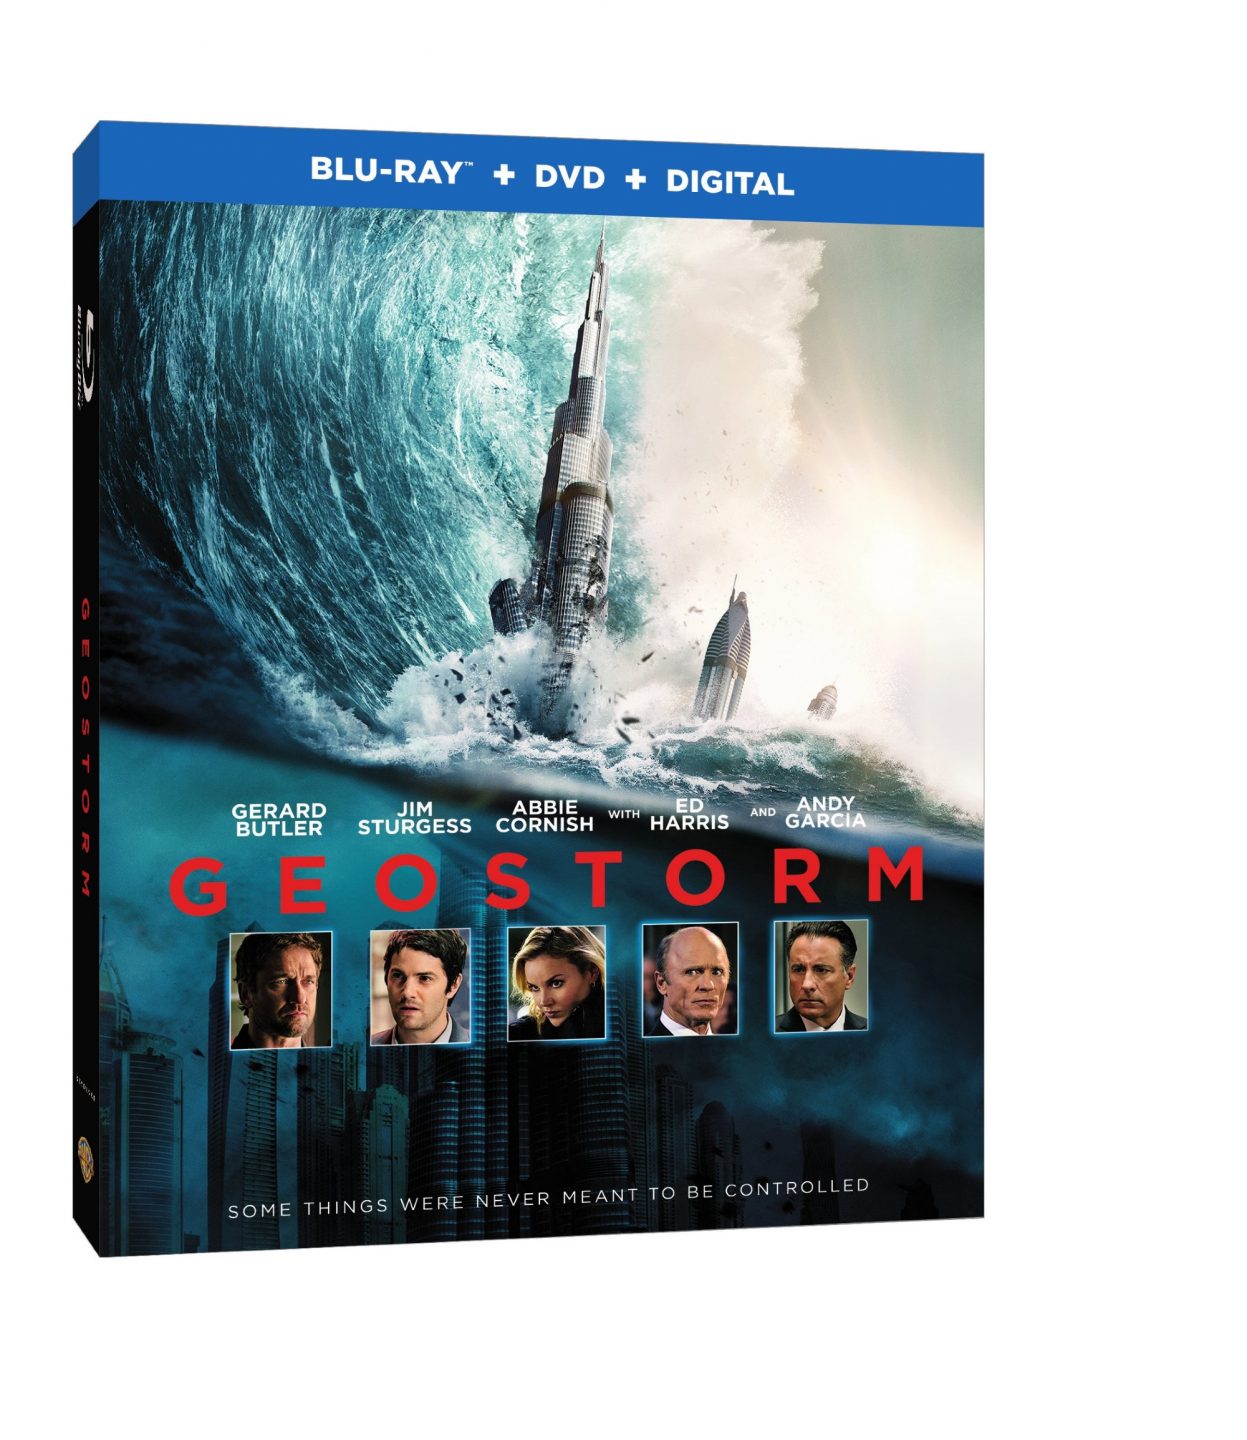 Geostorm Blu-Ray/DVD/Digital HD cover (Warner Bros. Home Entertainment)